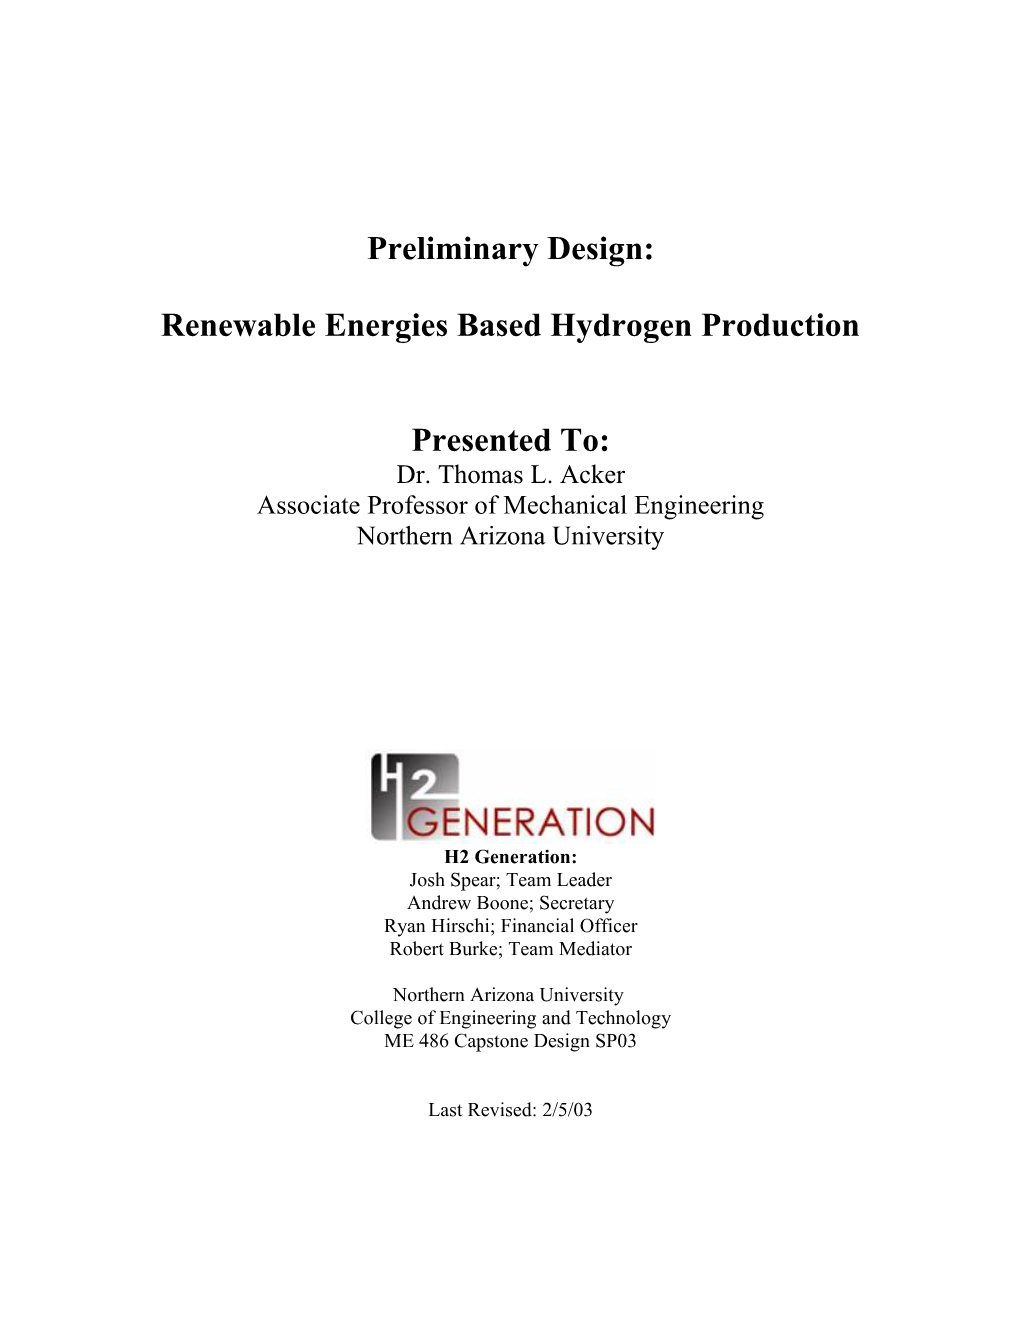 Renewable Energies Based Hydrogen Production